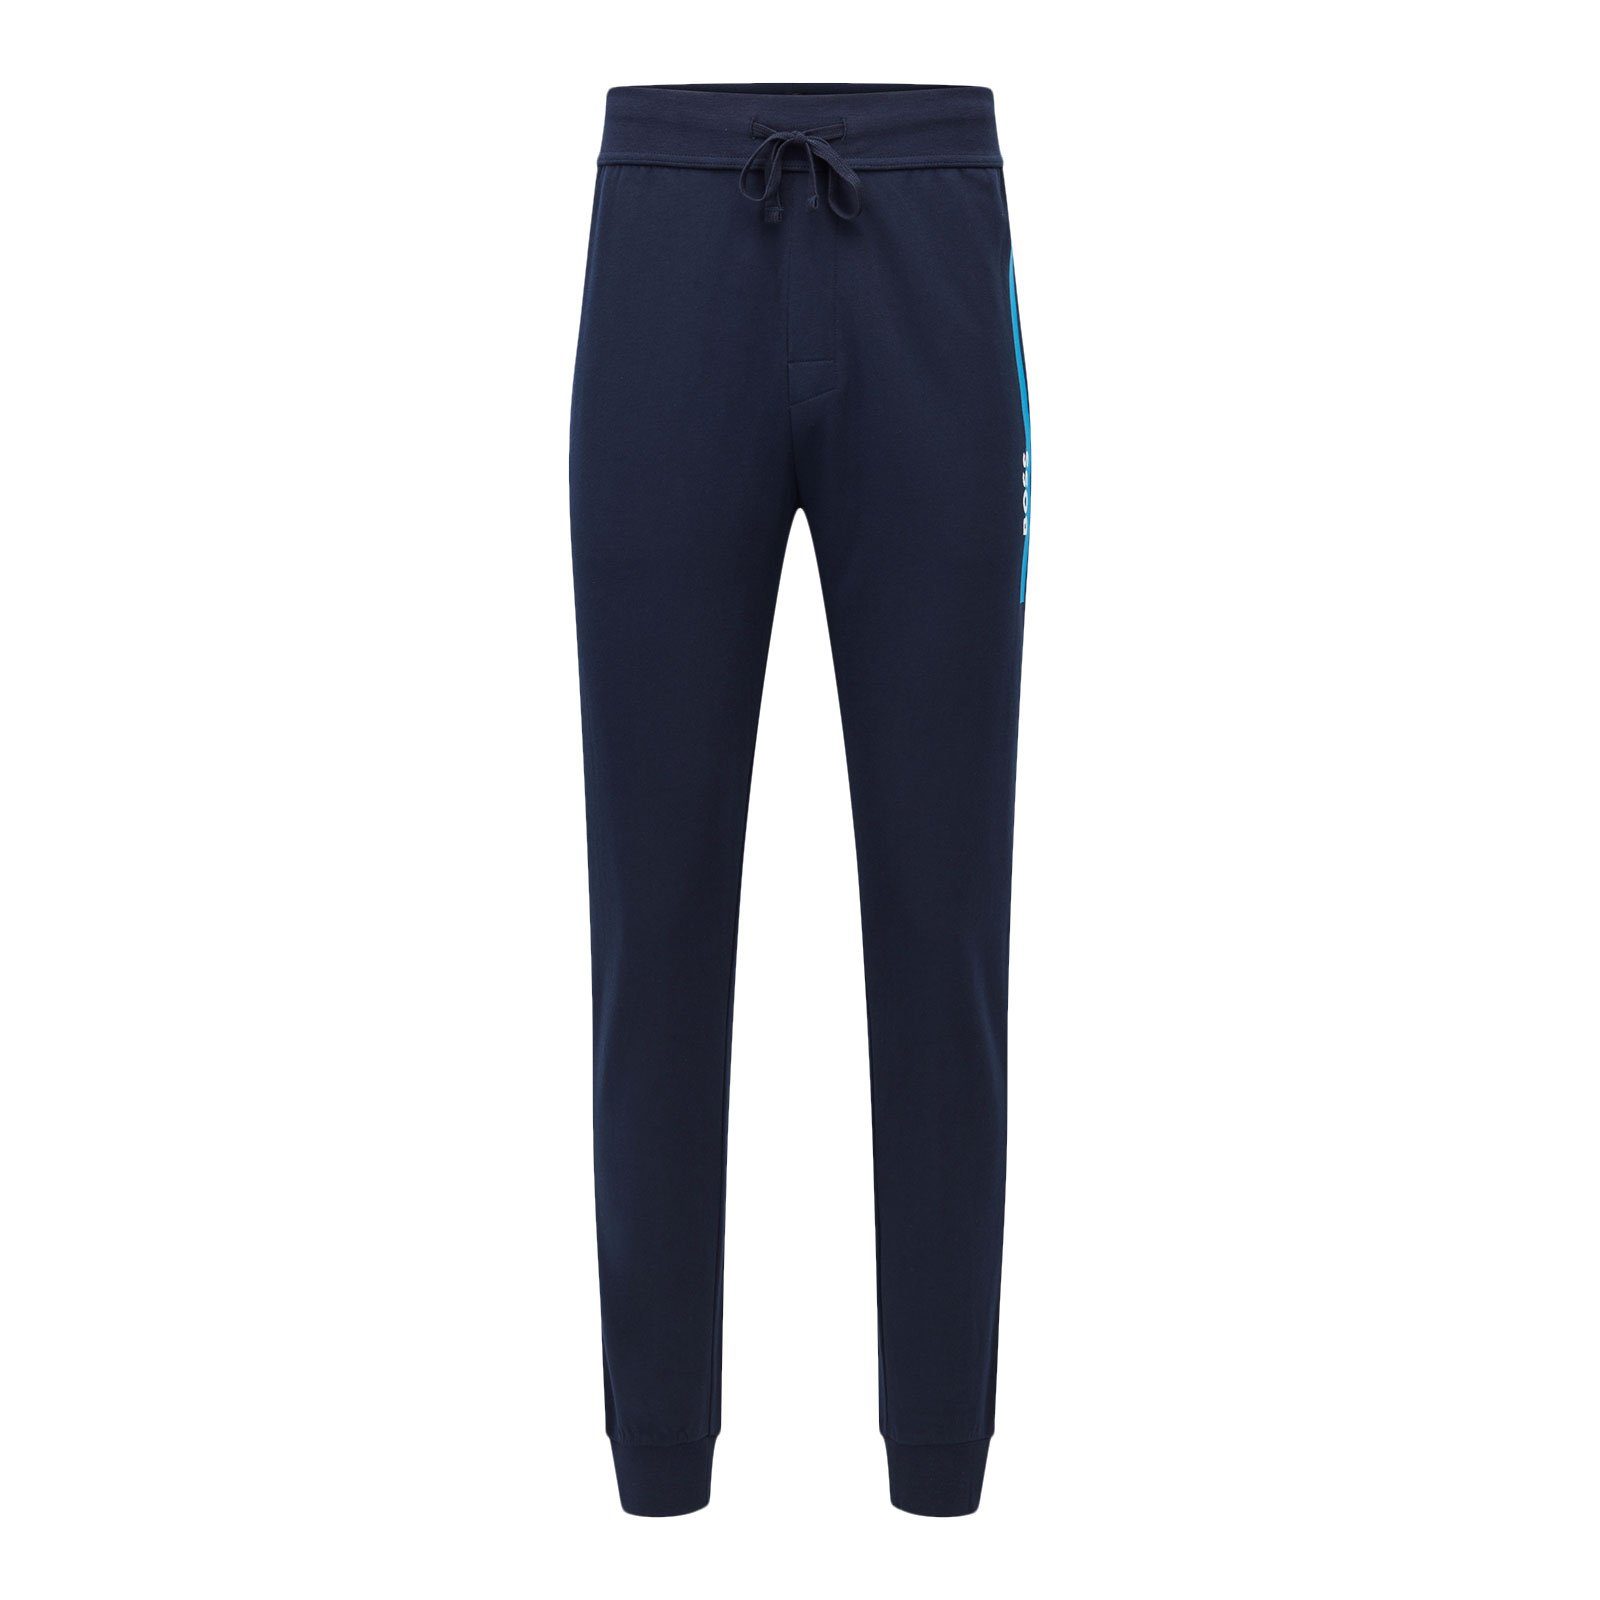 Authentic blue mit Bundhöhe Jogginghose mittlerer 403 BOSS Pants dark